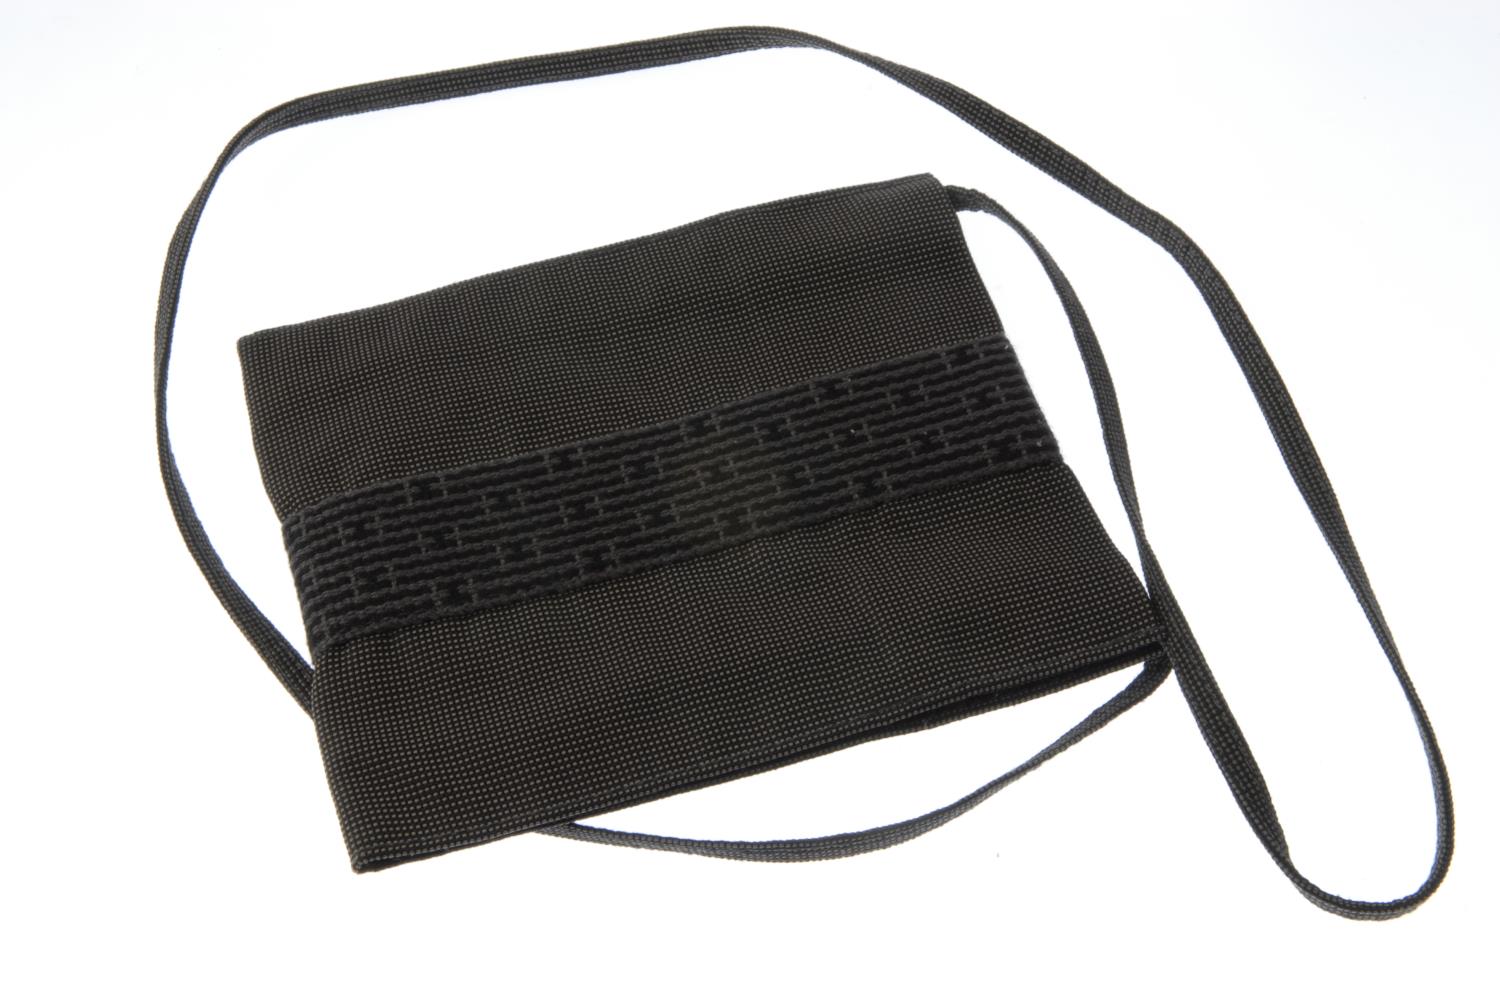 HERMÈS - a Herline Pochette handbag. The flat, rectangular grey textured fabric bag, with - Image 2 of 3